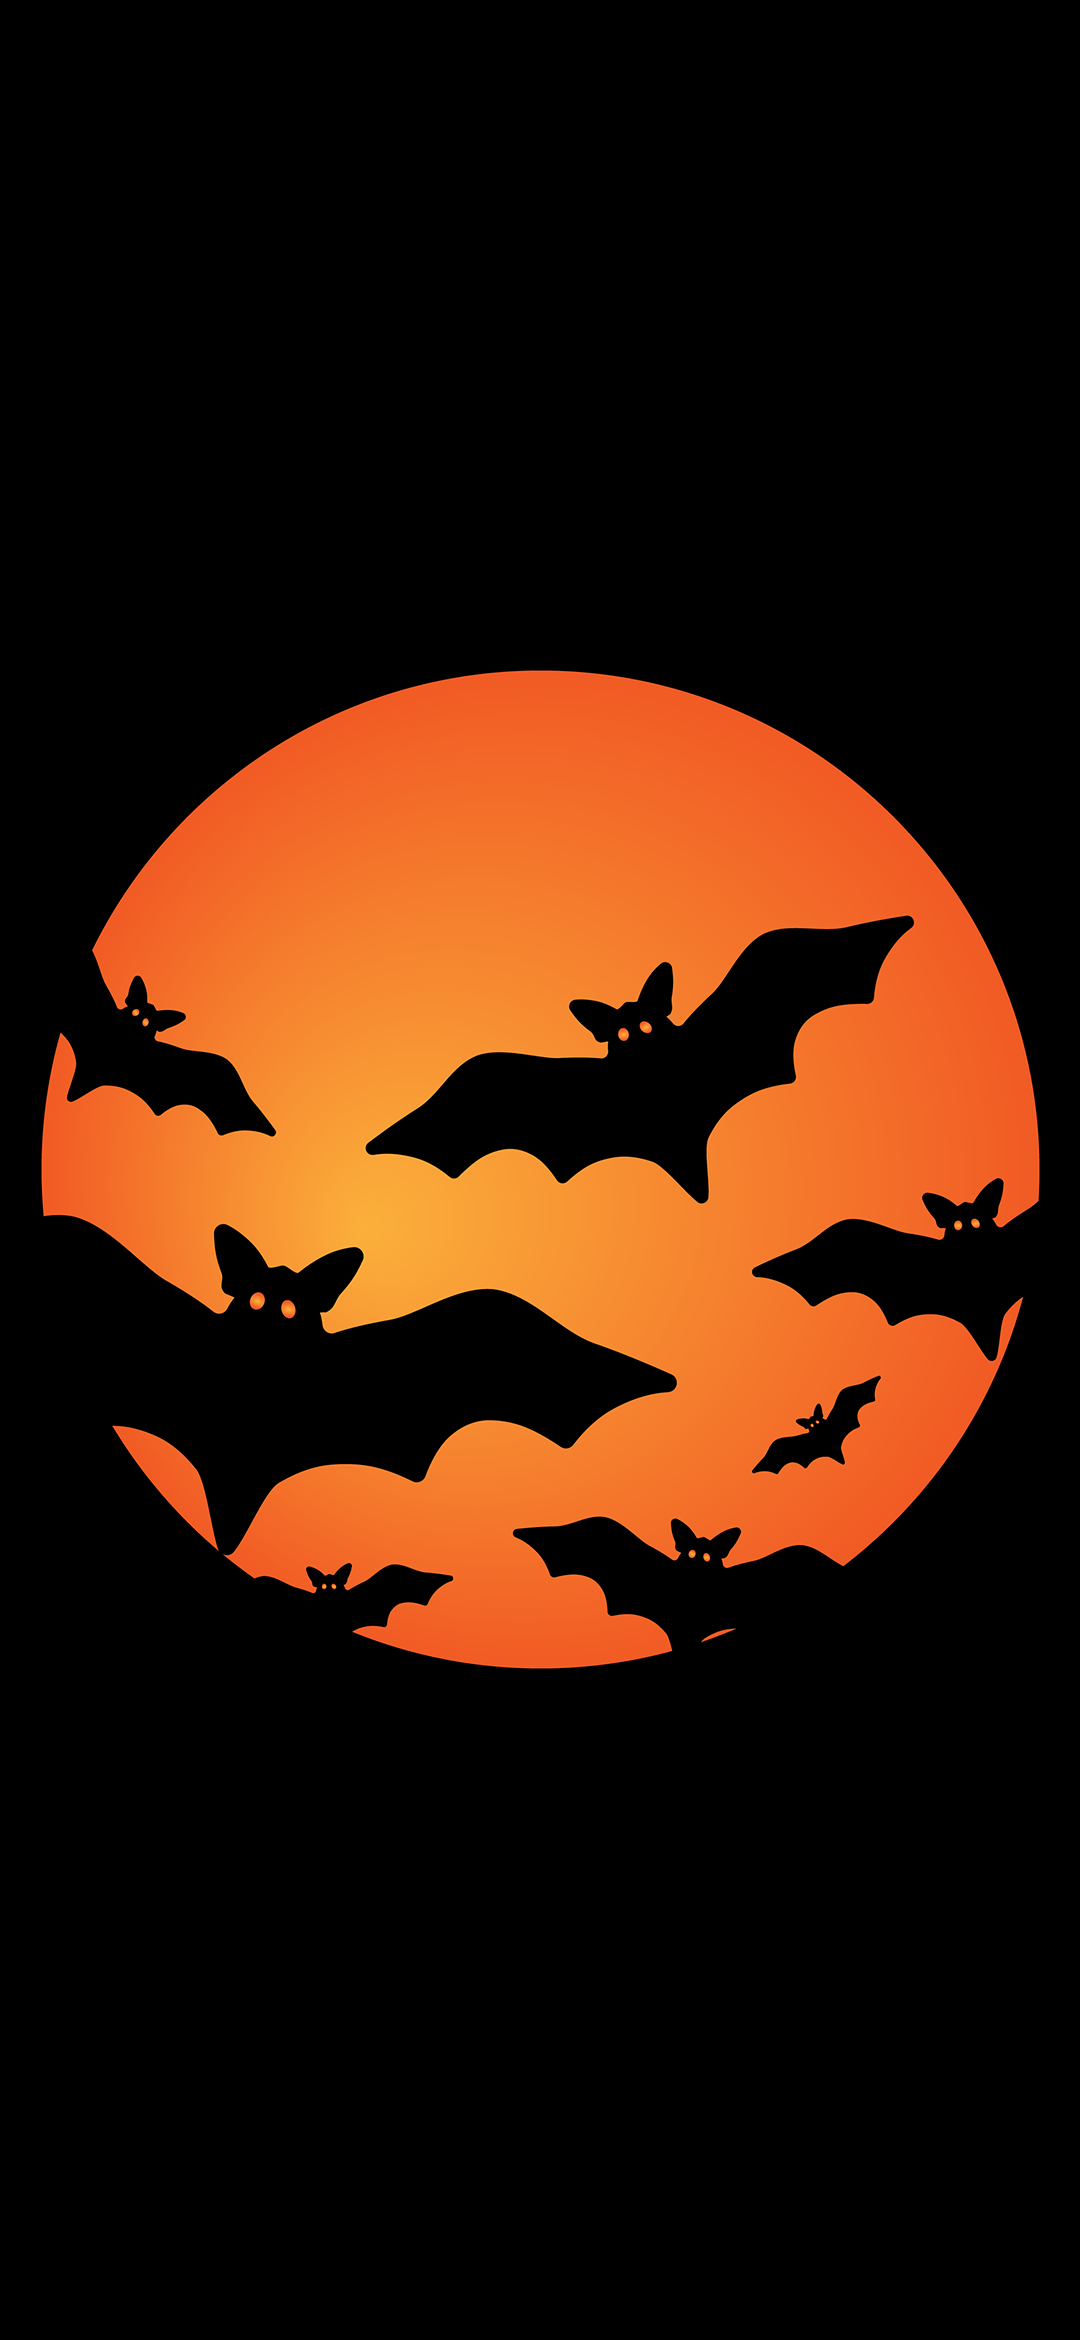 Bat Wallpaper Vector Images over 9800